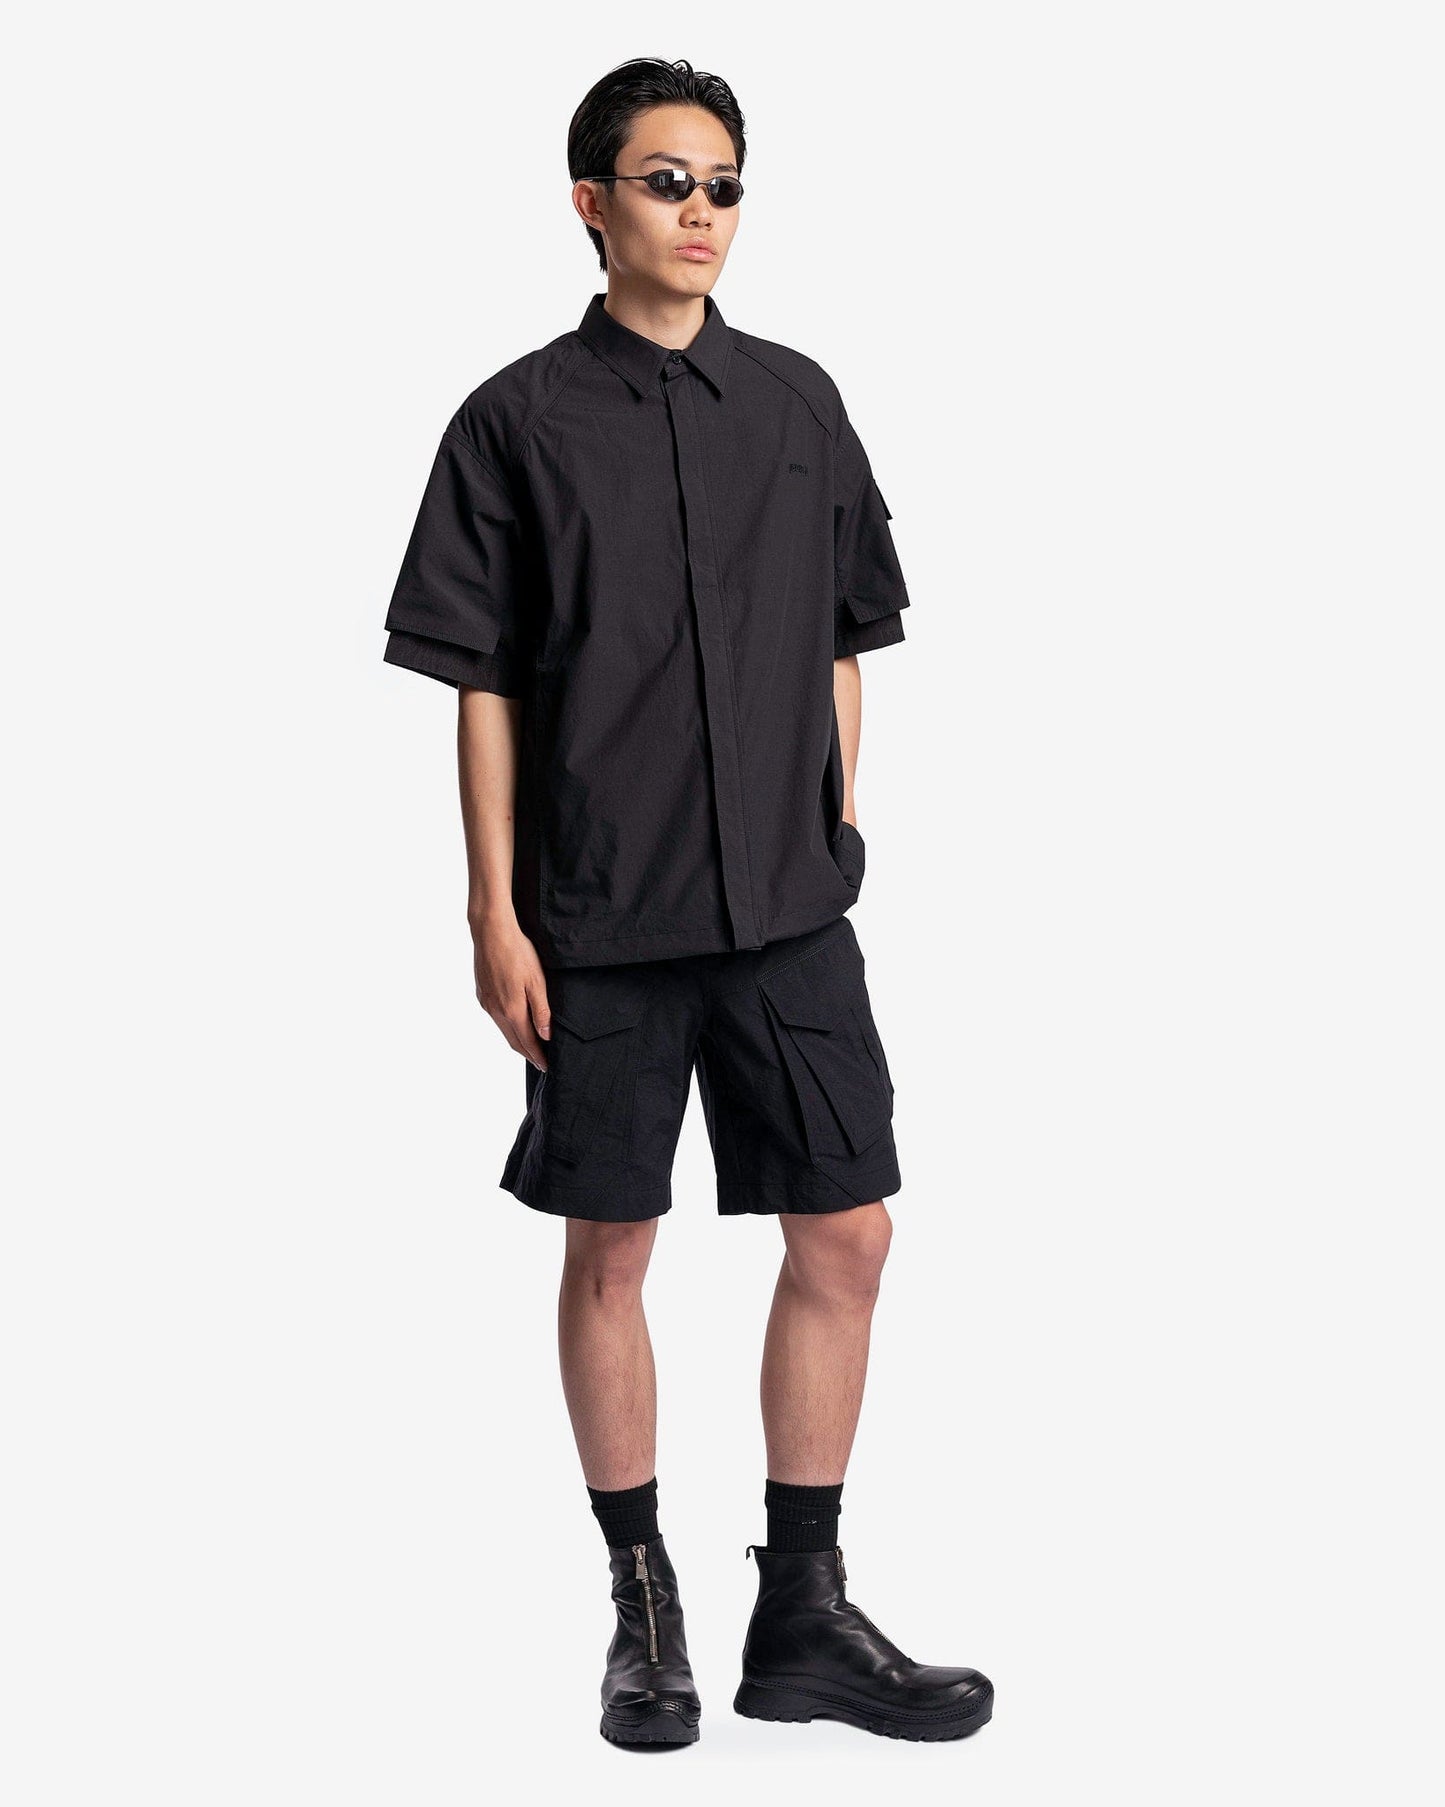 Juun.J Men's Shirts Sleeve Layered String Short Sleeve Shirts in Black